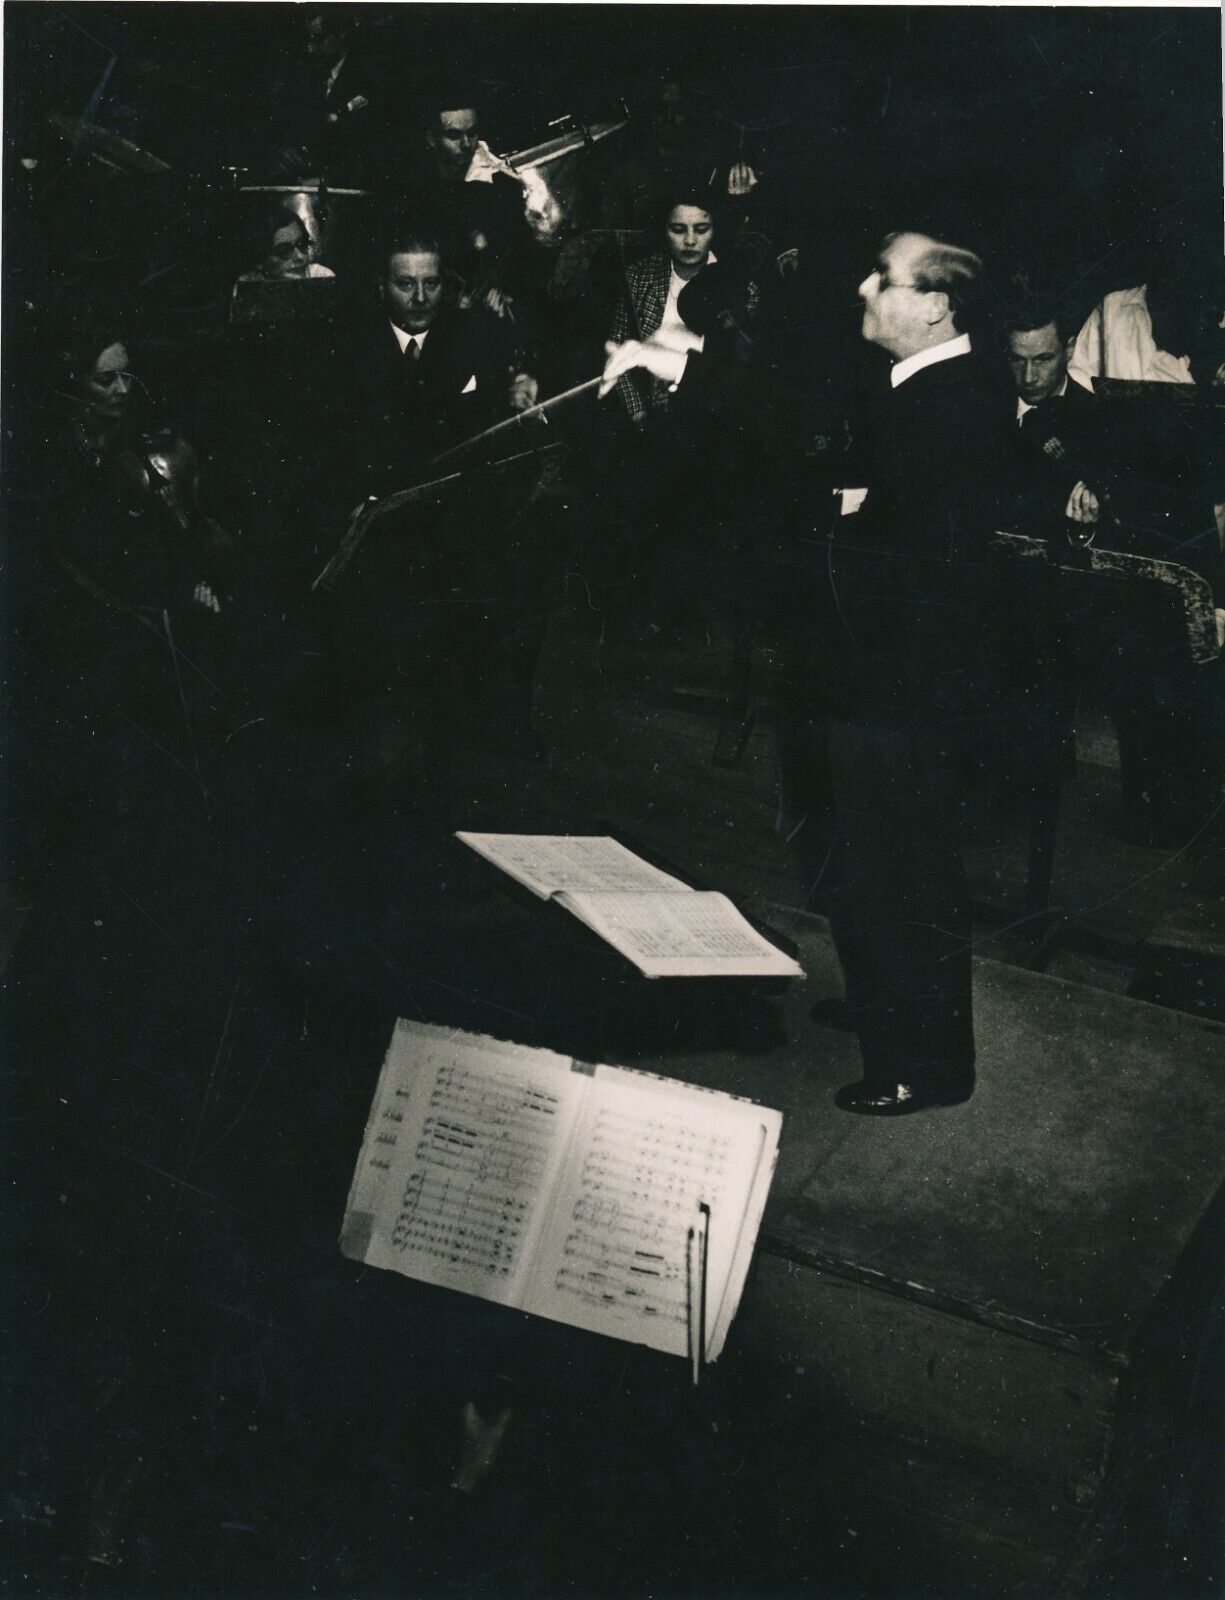 Désiré-Émile INGHELBRECHT conductor orchestra by François KOLLAR photo photography